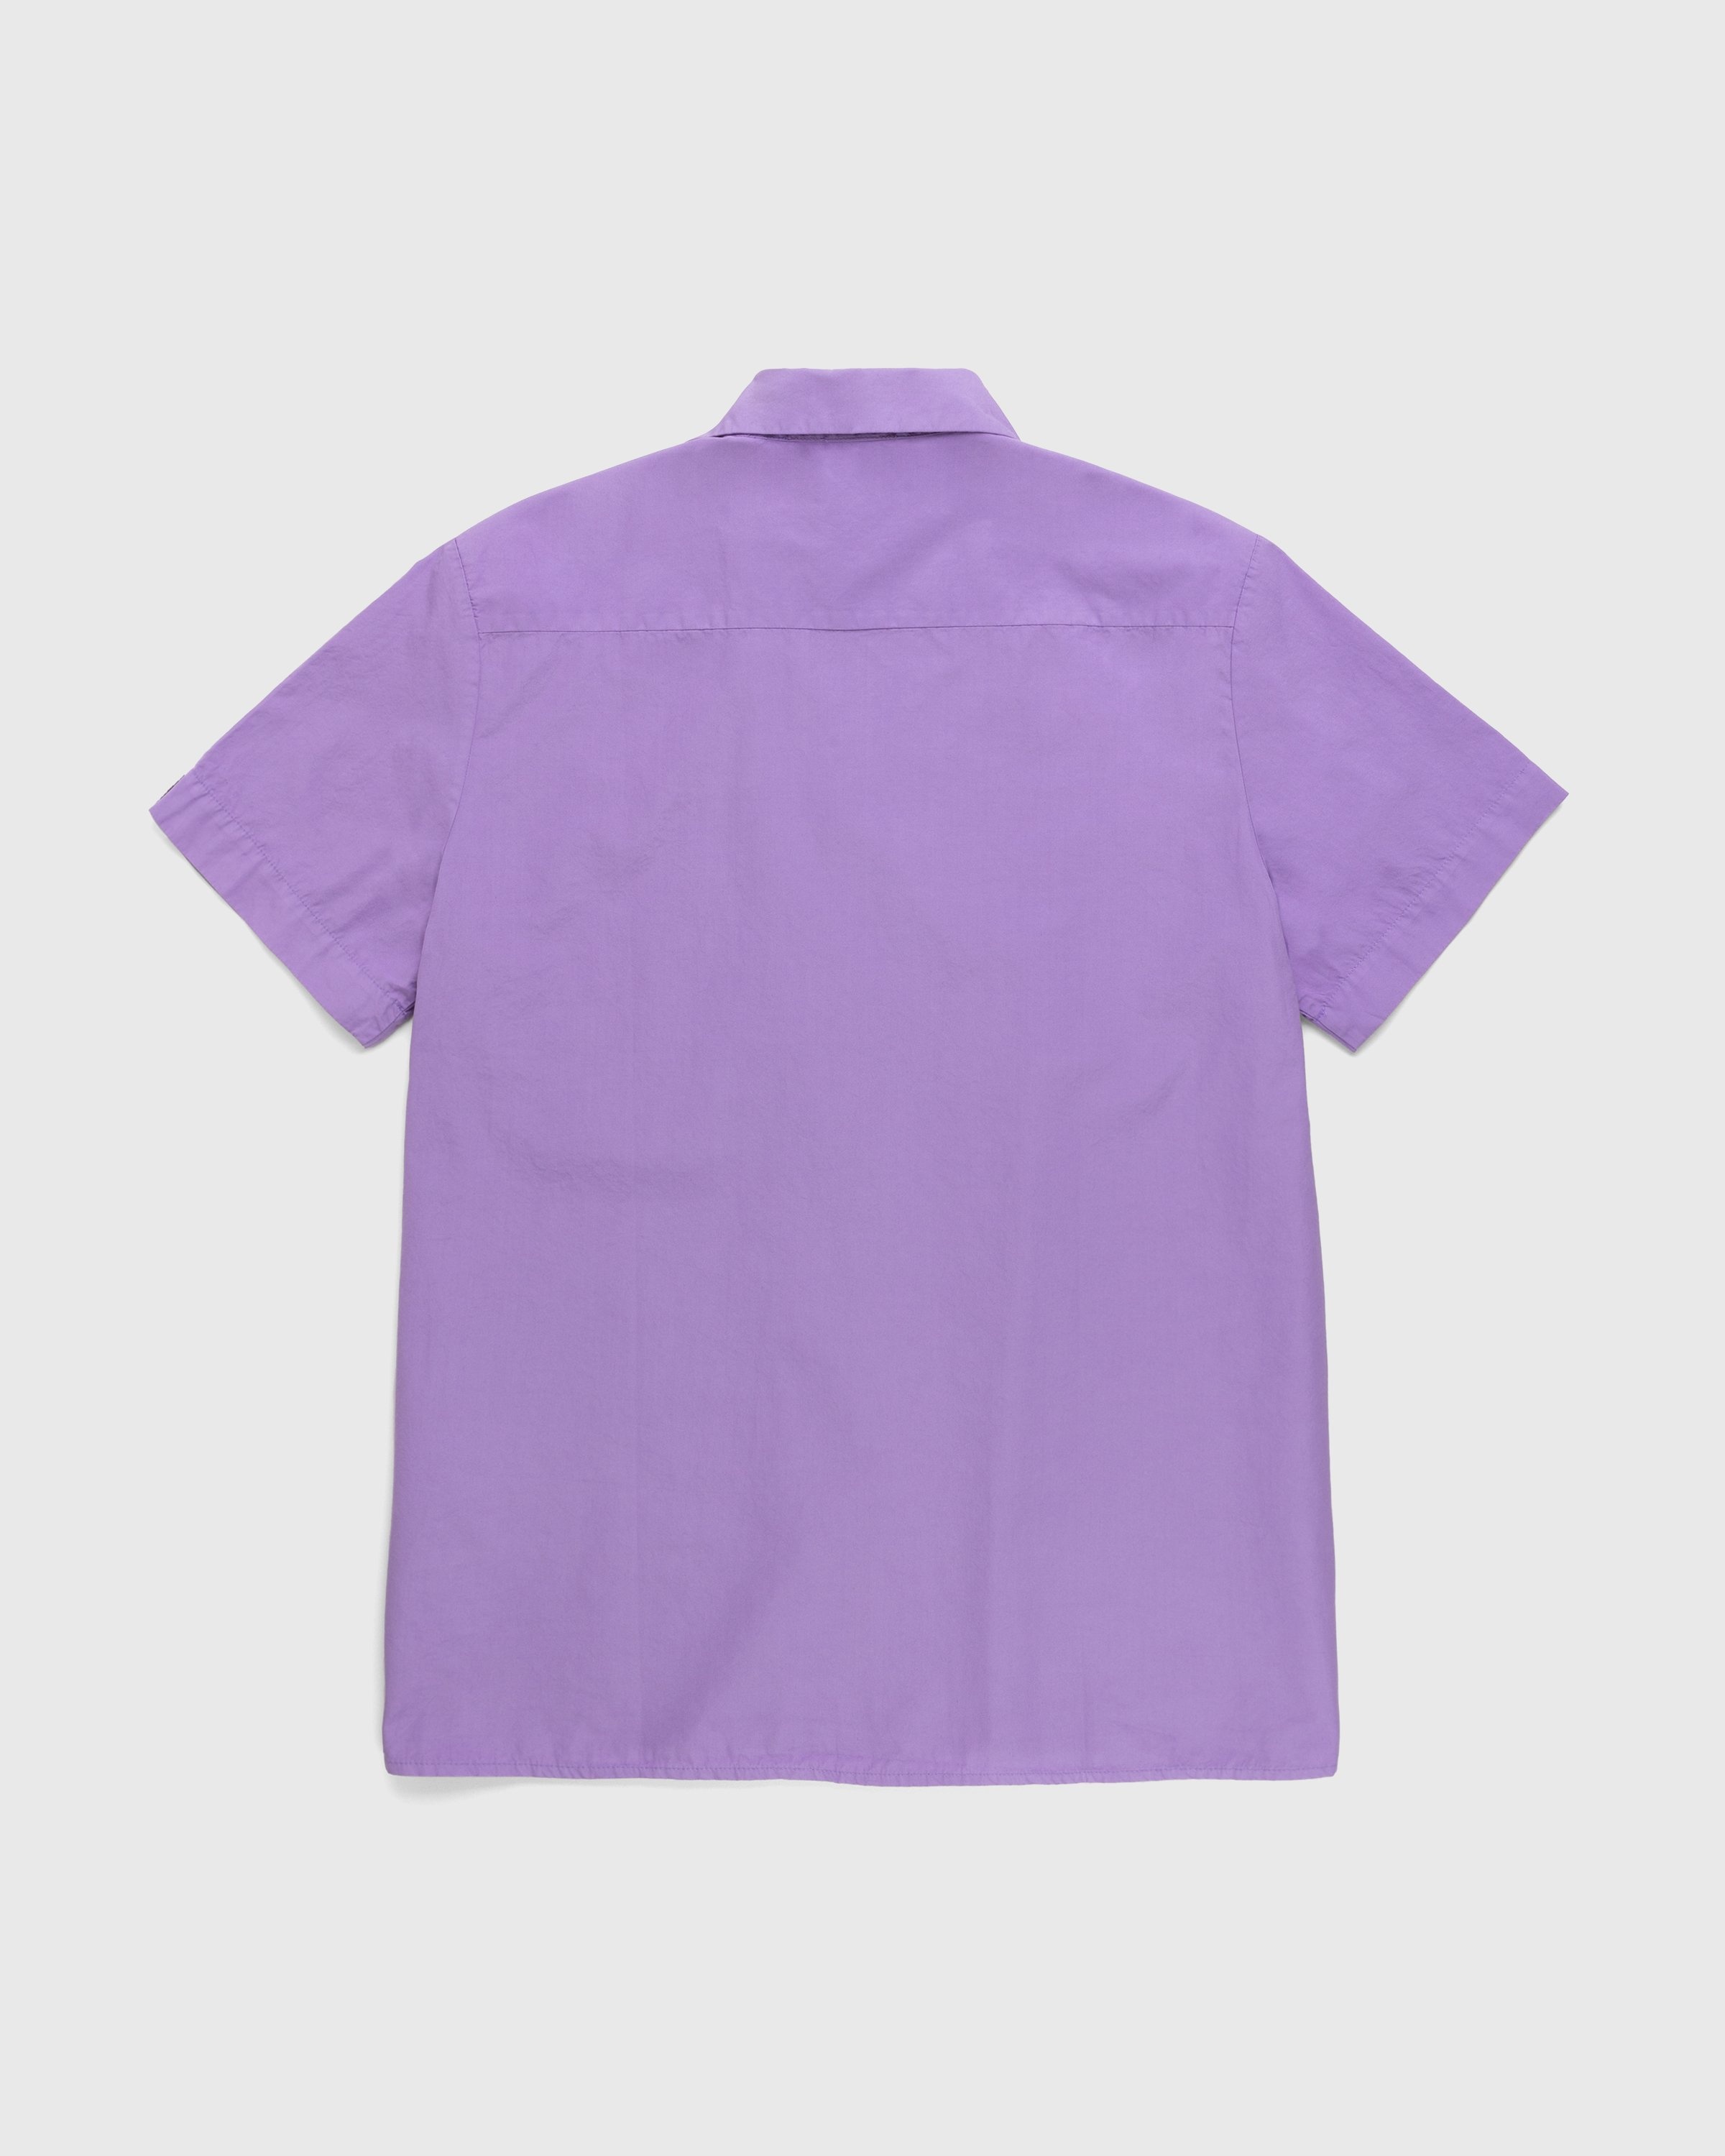 Winnie New York – Cotton Camp Shirt Lavender - Shirts - Purple - Image 2